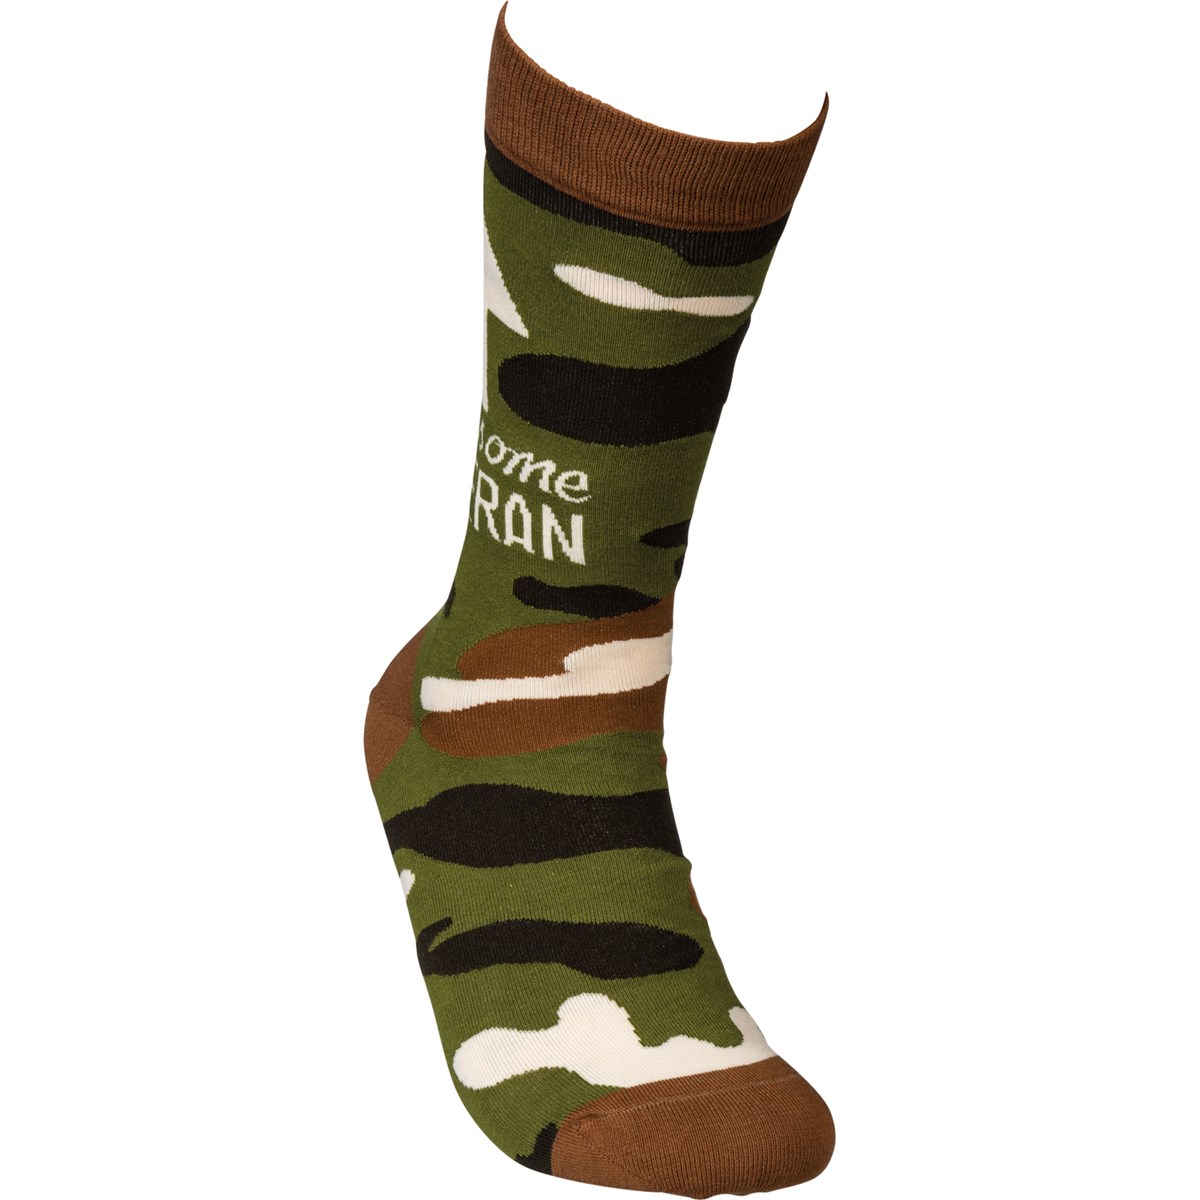 Awesome Veteran Socks - Cotton, Nylon, Spandex